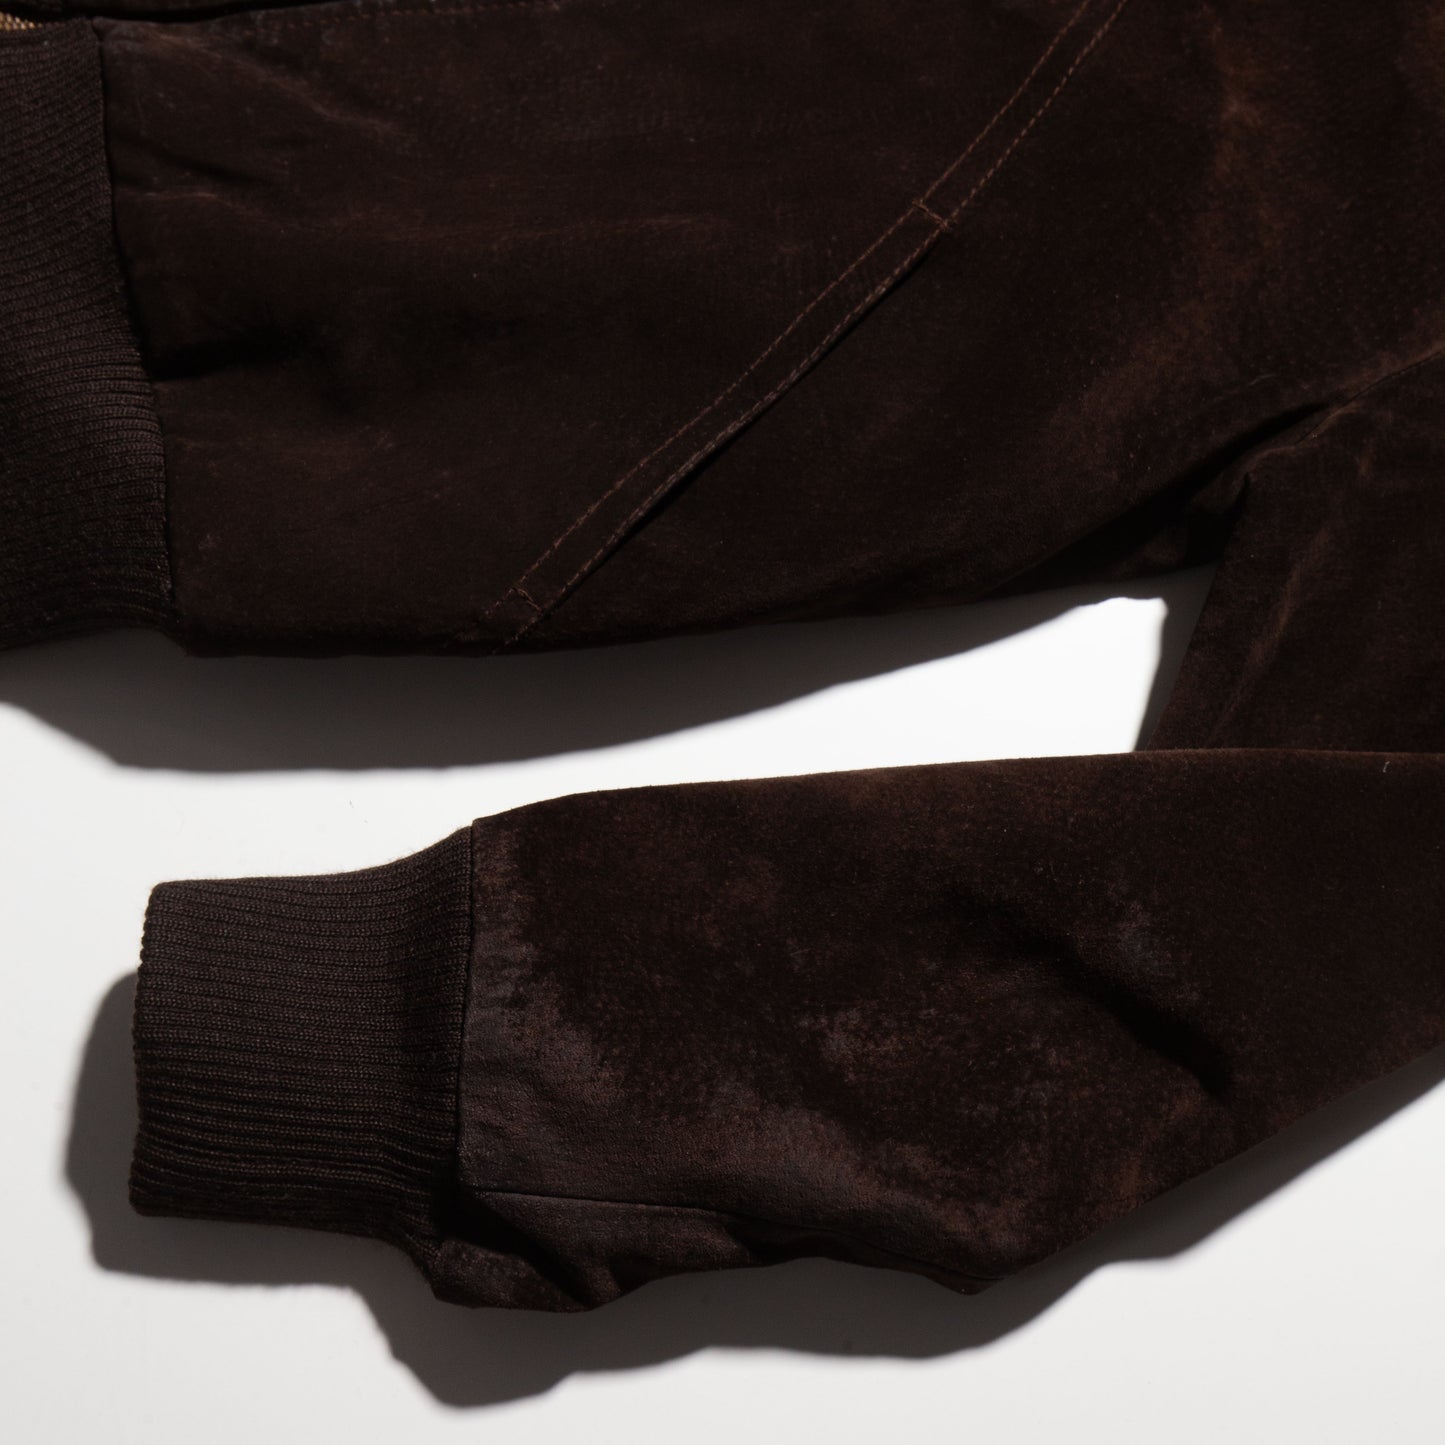 vintage rib suede leather jacket